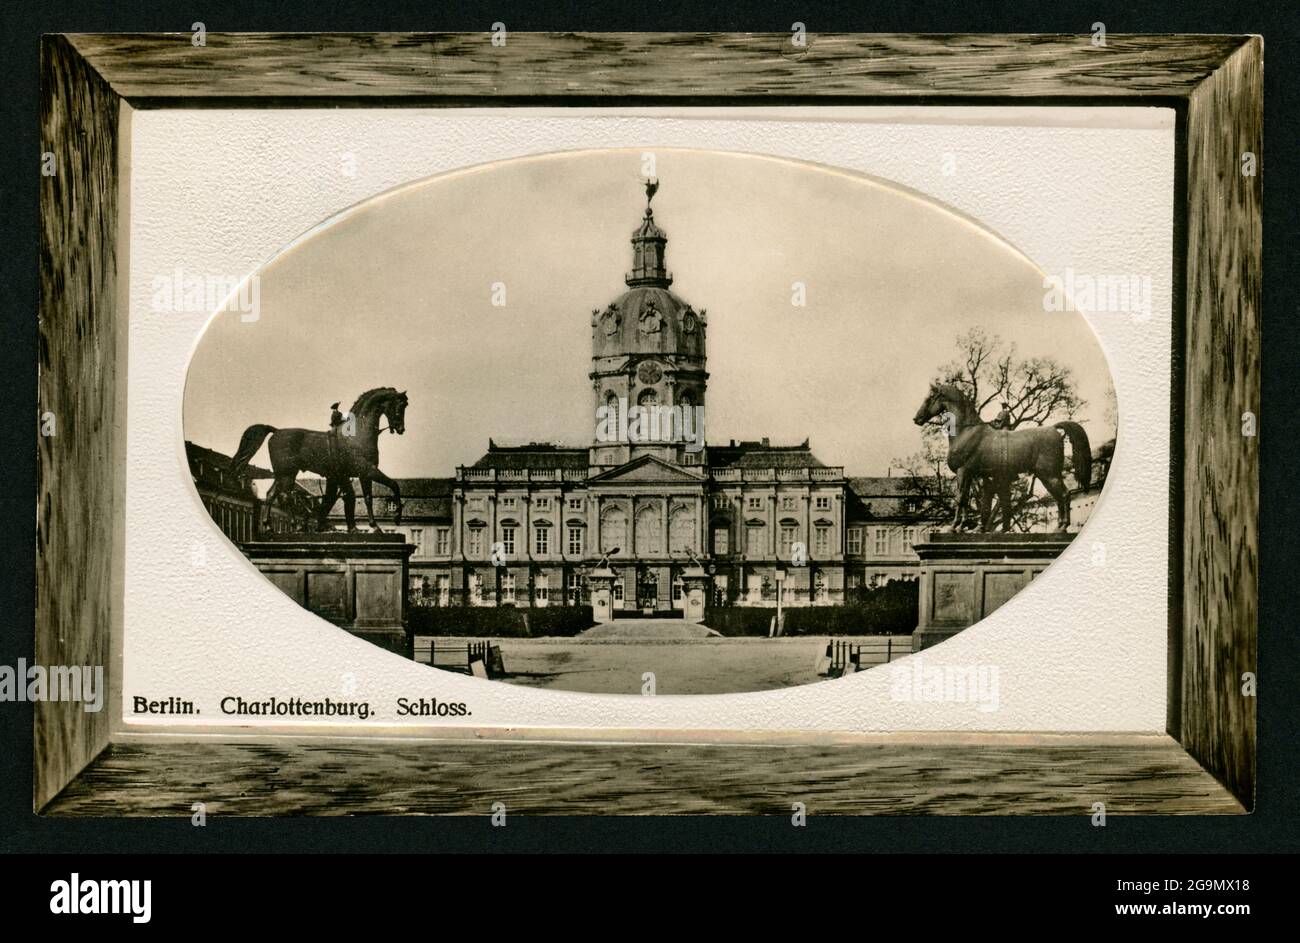 Geographie / Reisen, Deutschland, Berlin, Schloss Charlottenburg, Postkarte, Gesendet 11. 10. 1903, ADDITIONAL-RIGHTS-CLEARANCE-INFO-NOT-AVAILABLE Stockfoto